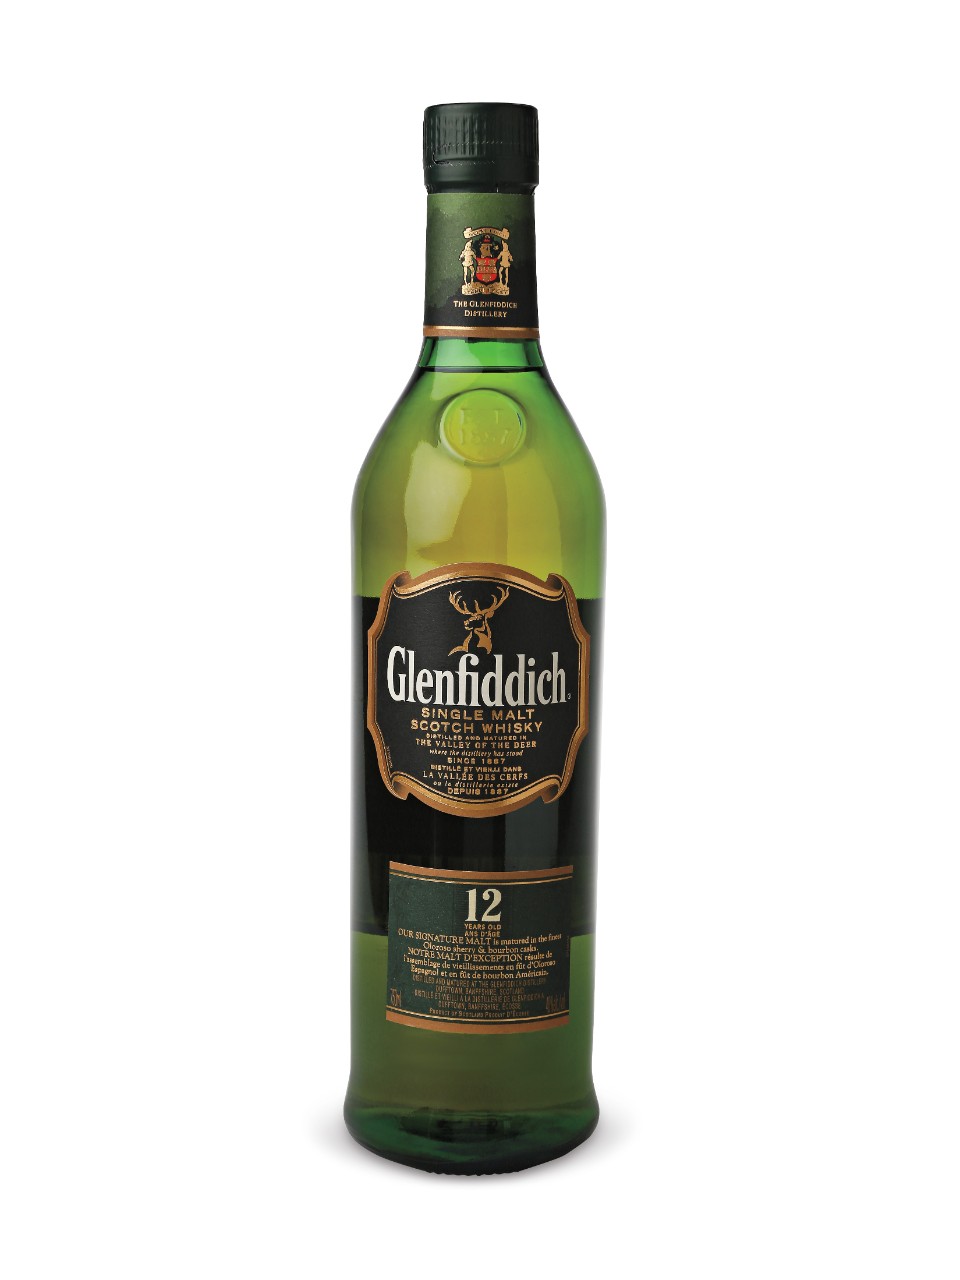 Glenfiddich Single Malt 12 Years Old Scotch Whisky